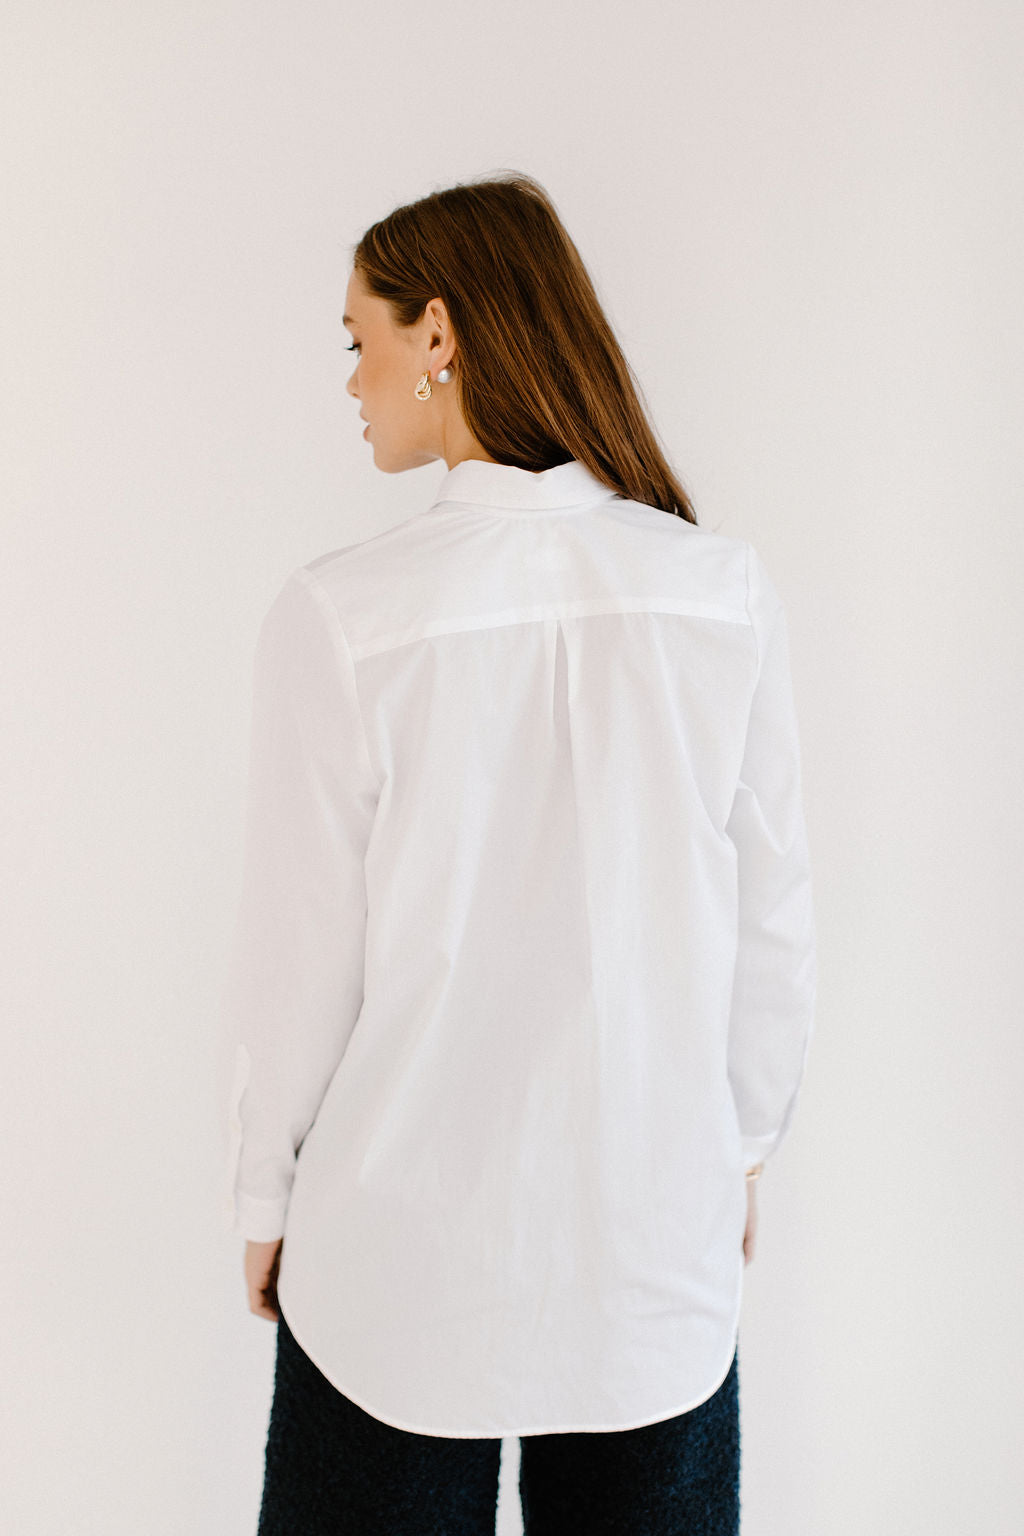 Eleanor Shirt – Eleanor Leftwich